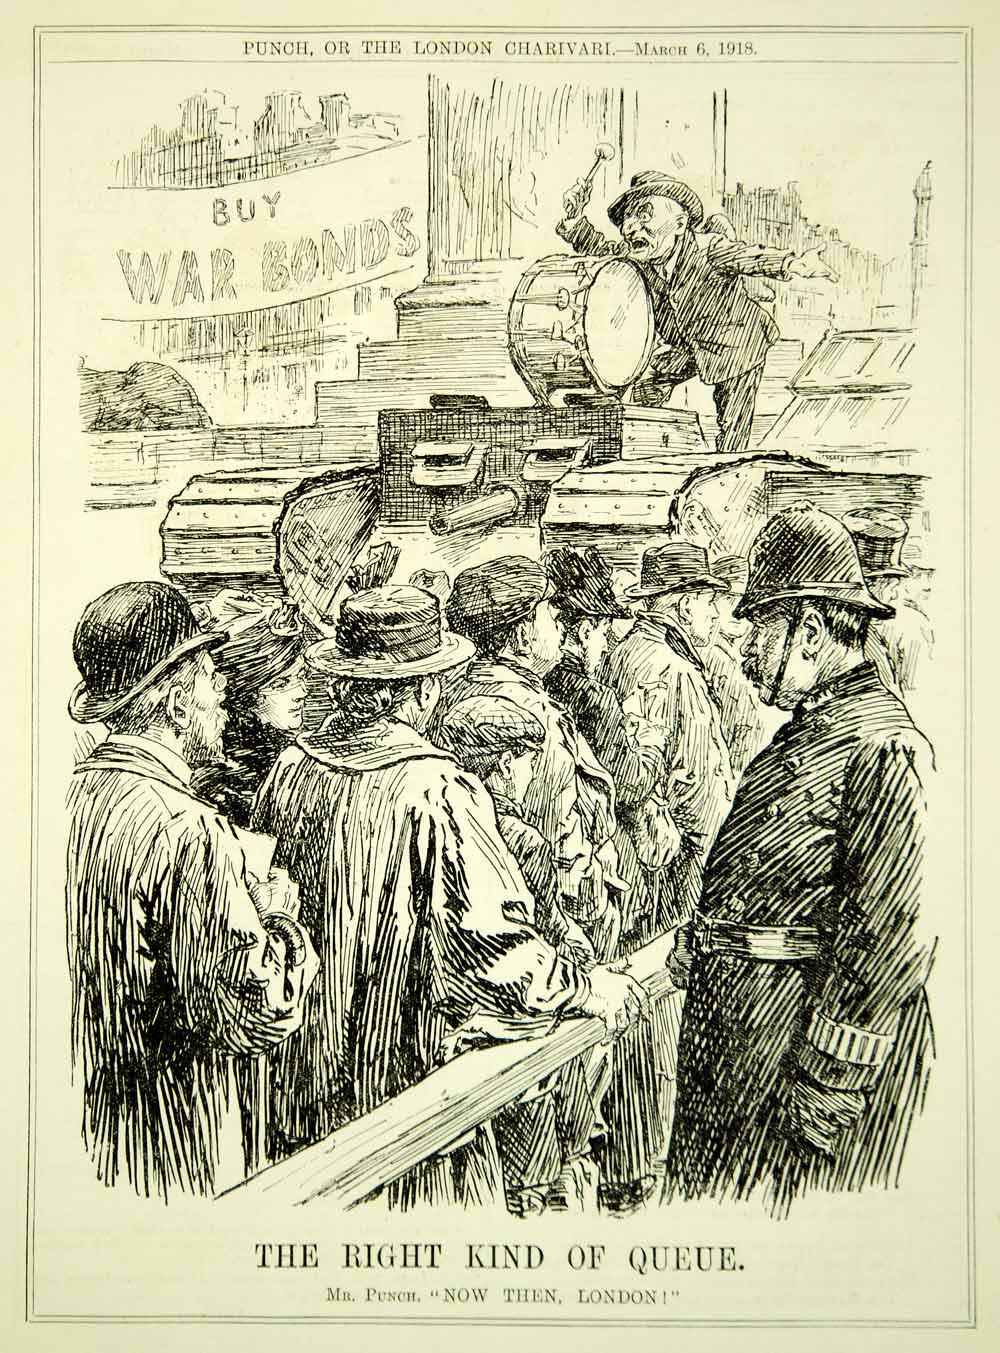 1918 Wood Engraving WWI Political Cartoon PUNCH War Bonds British Home Front